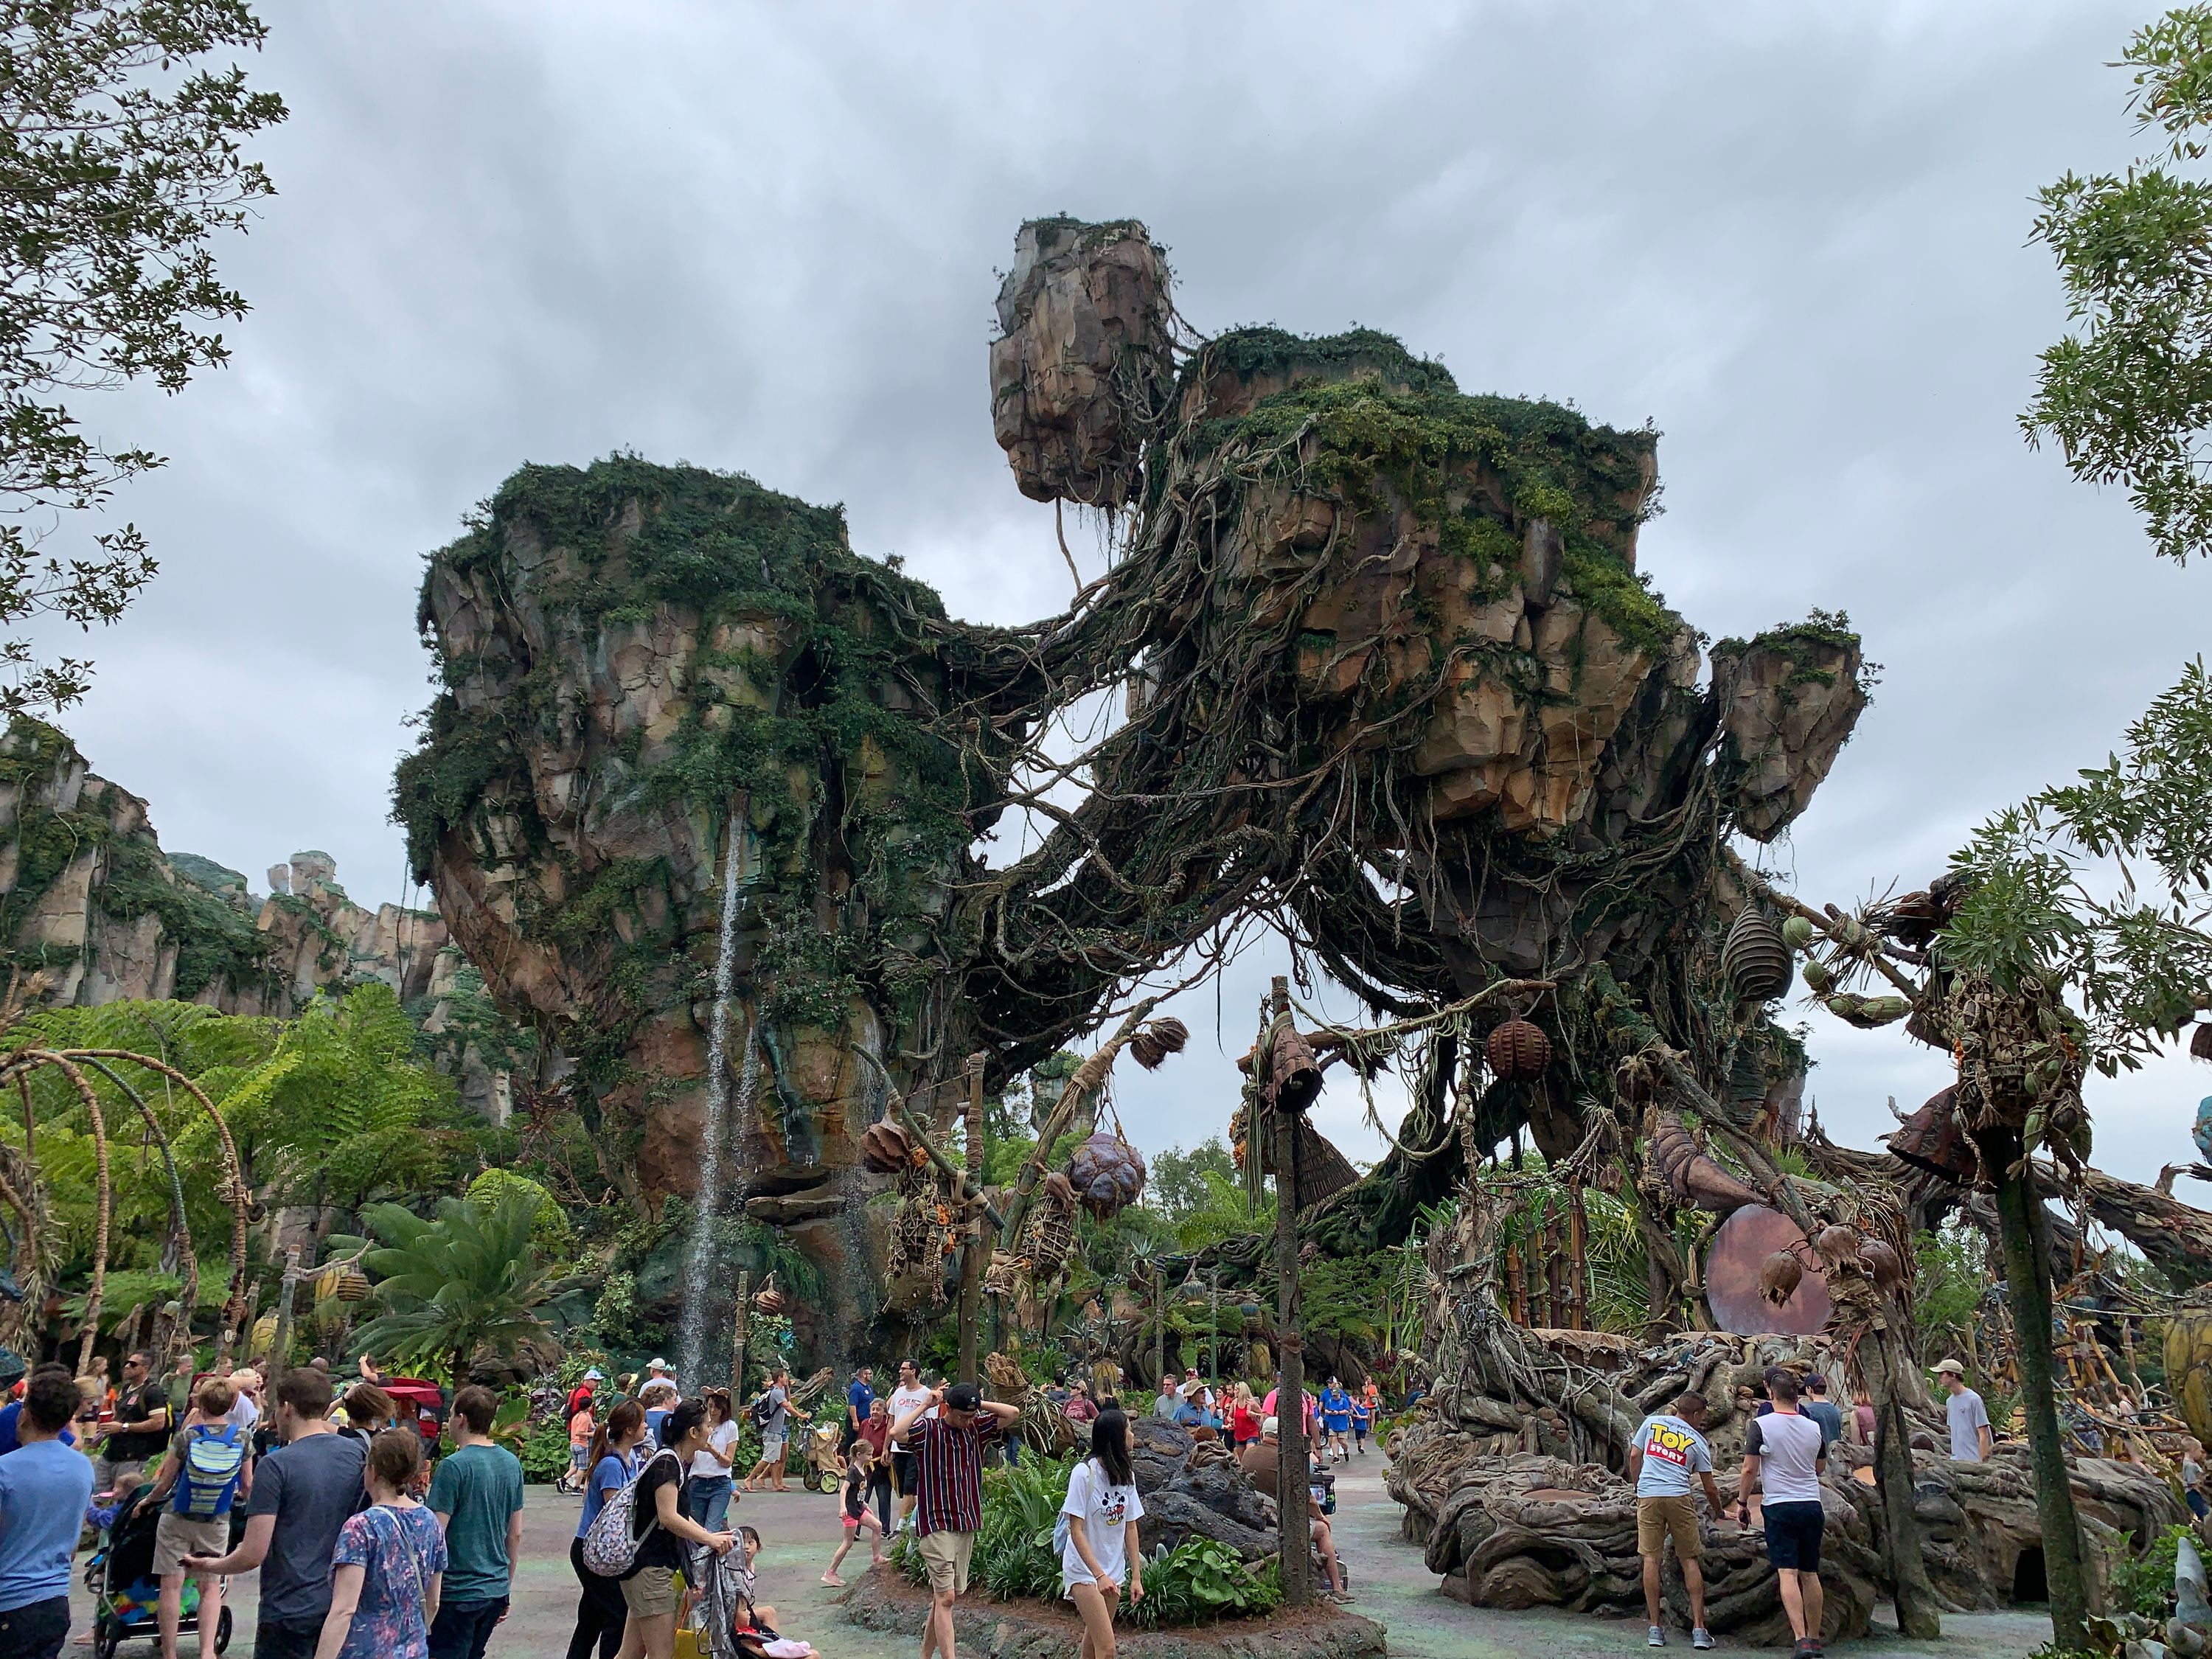 A random view of Pandora at Disney’s Animal Kingdom.